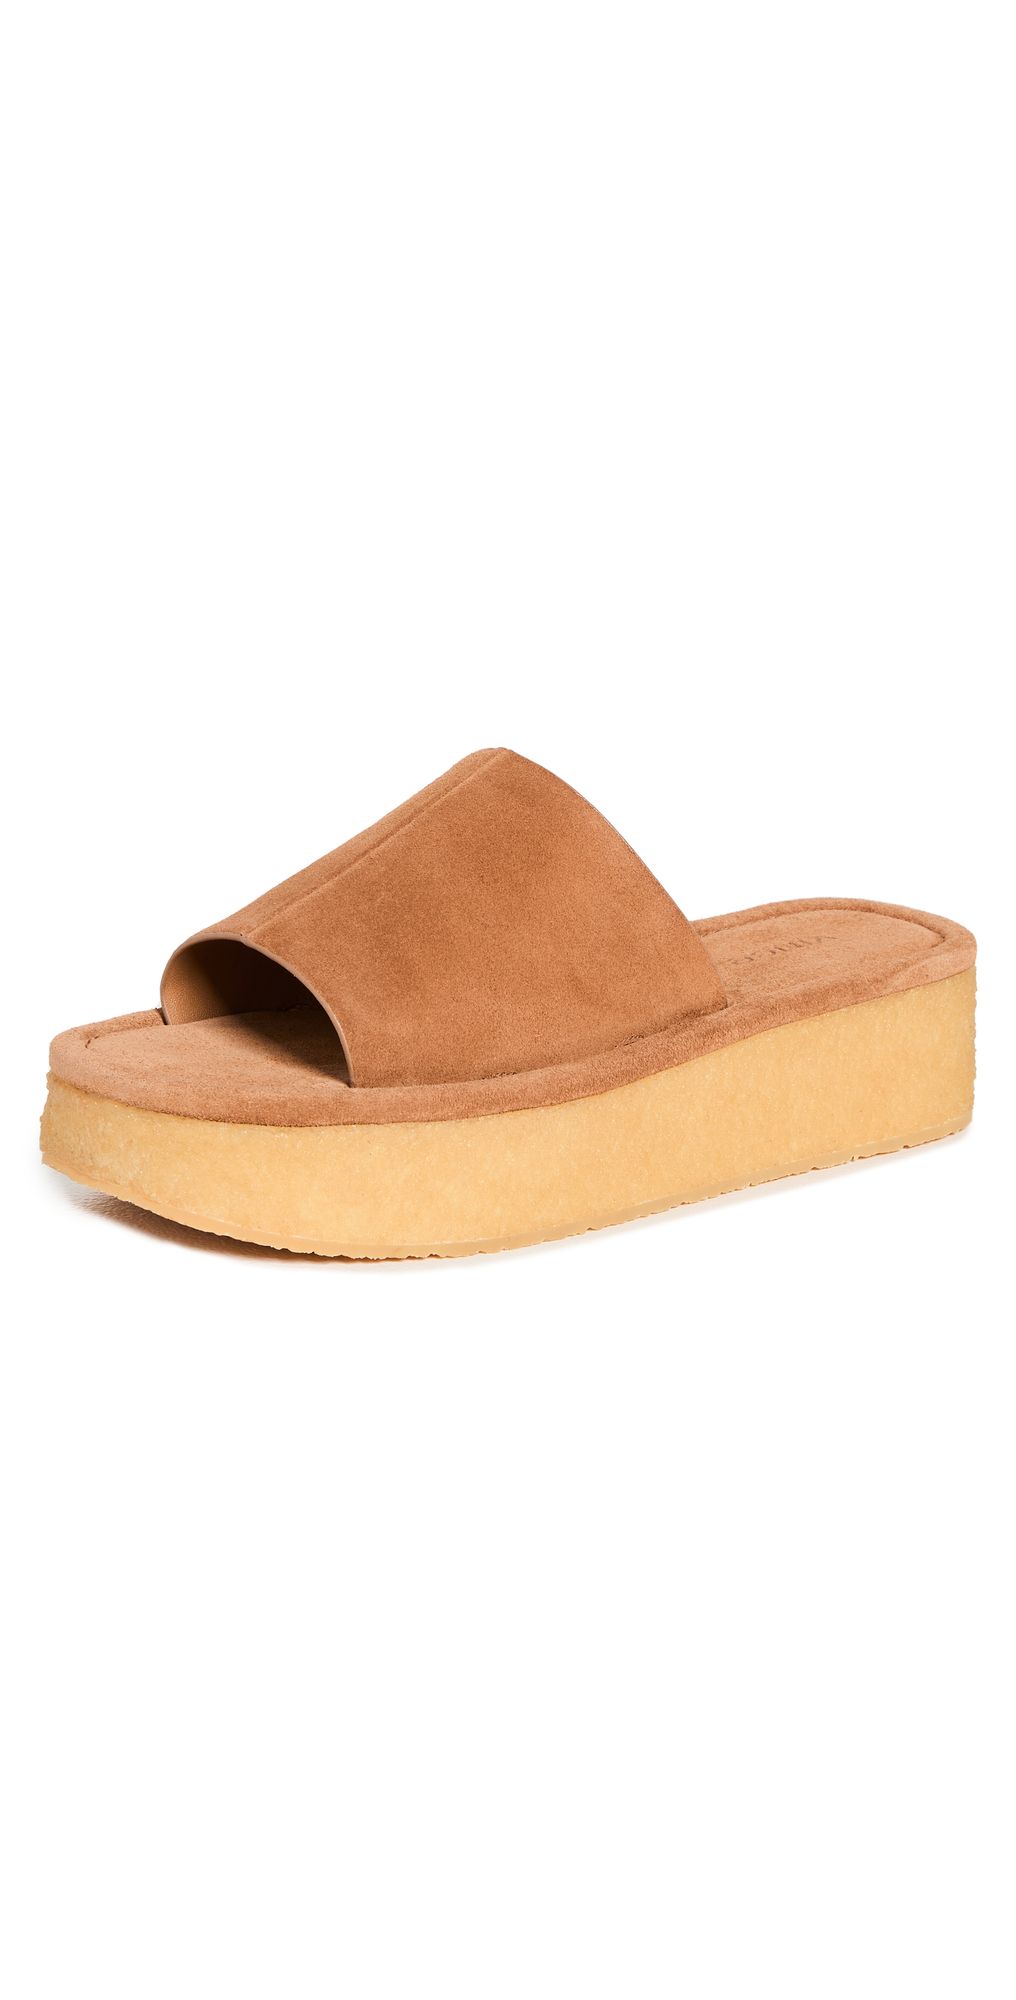 Palley Sandals | Shopbop